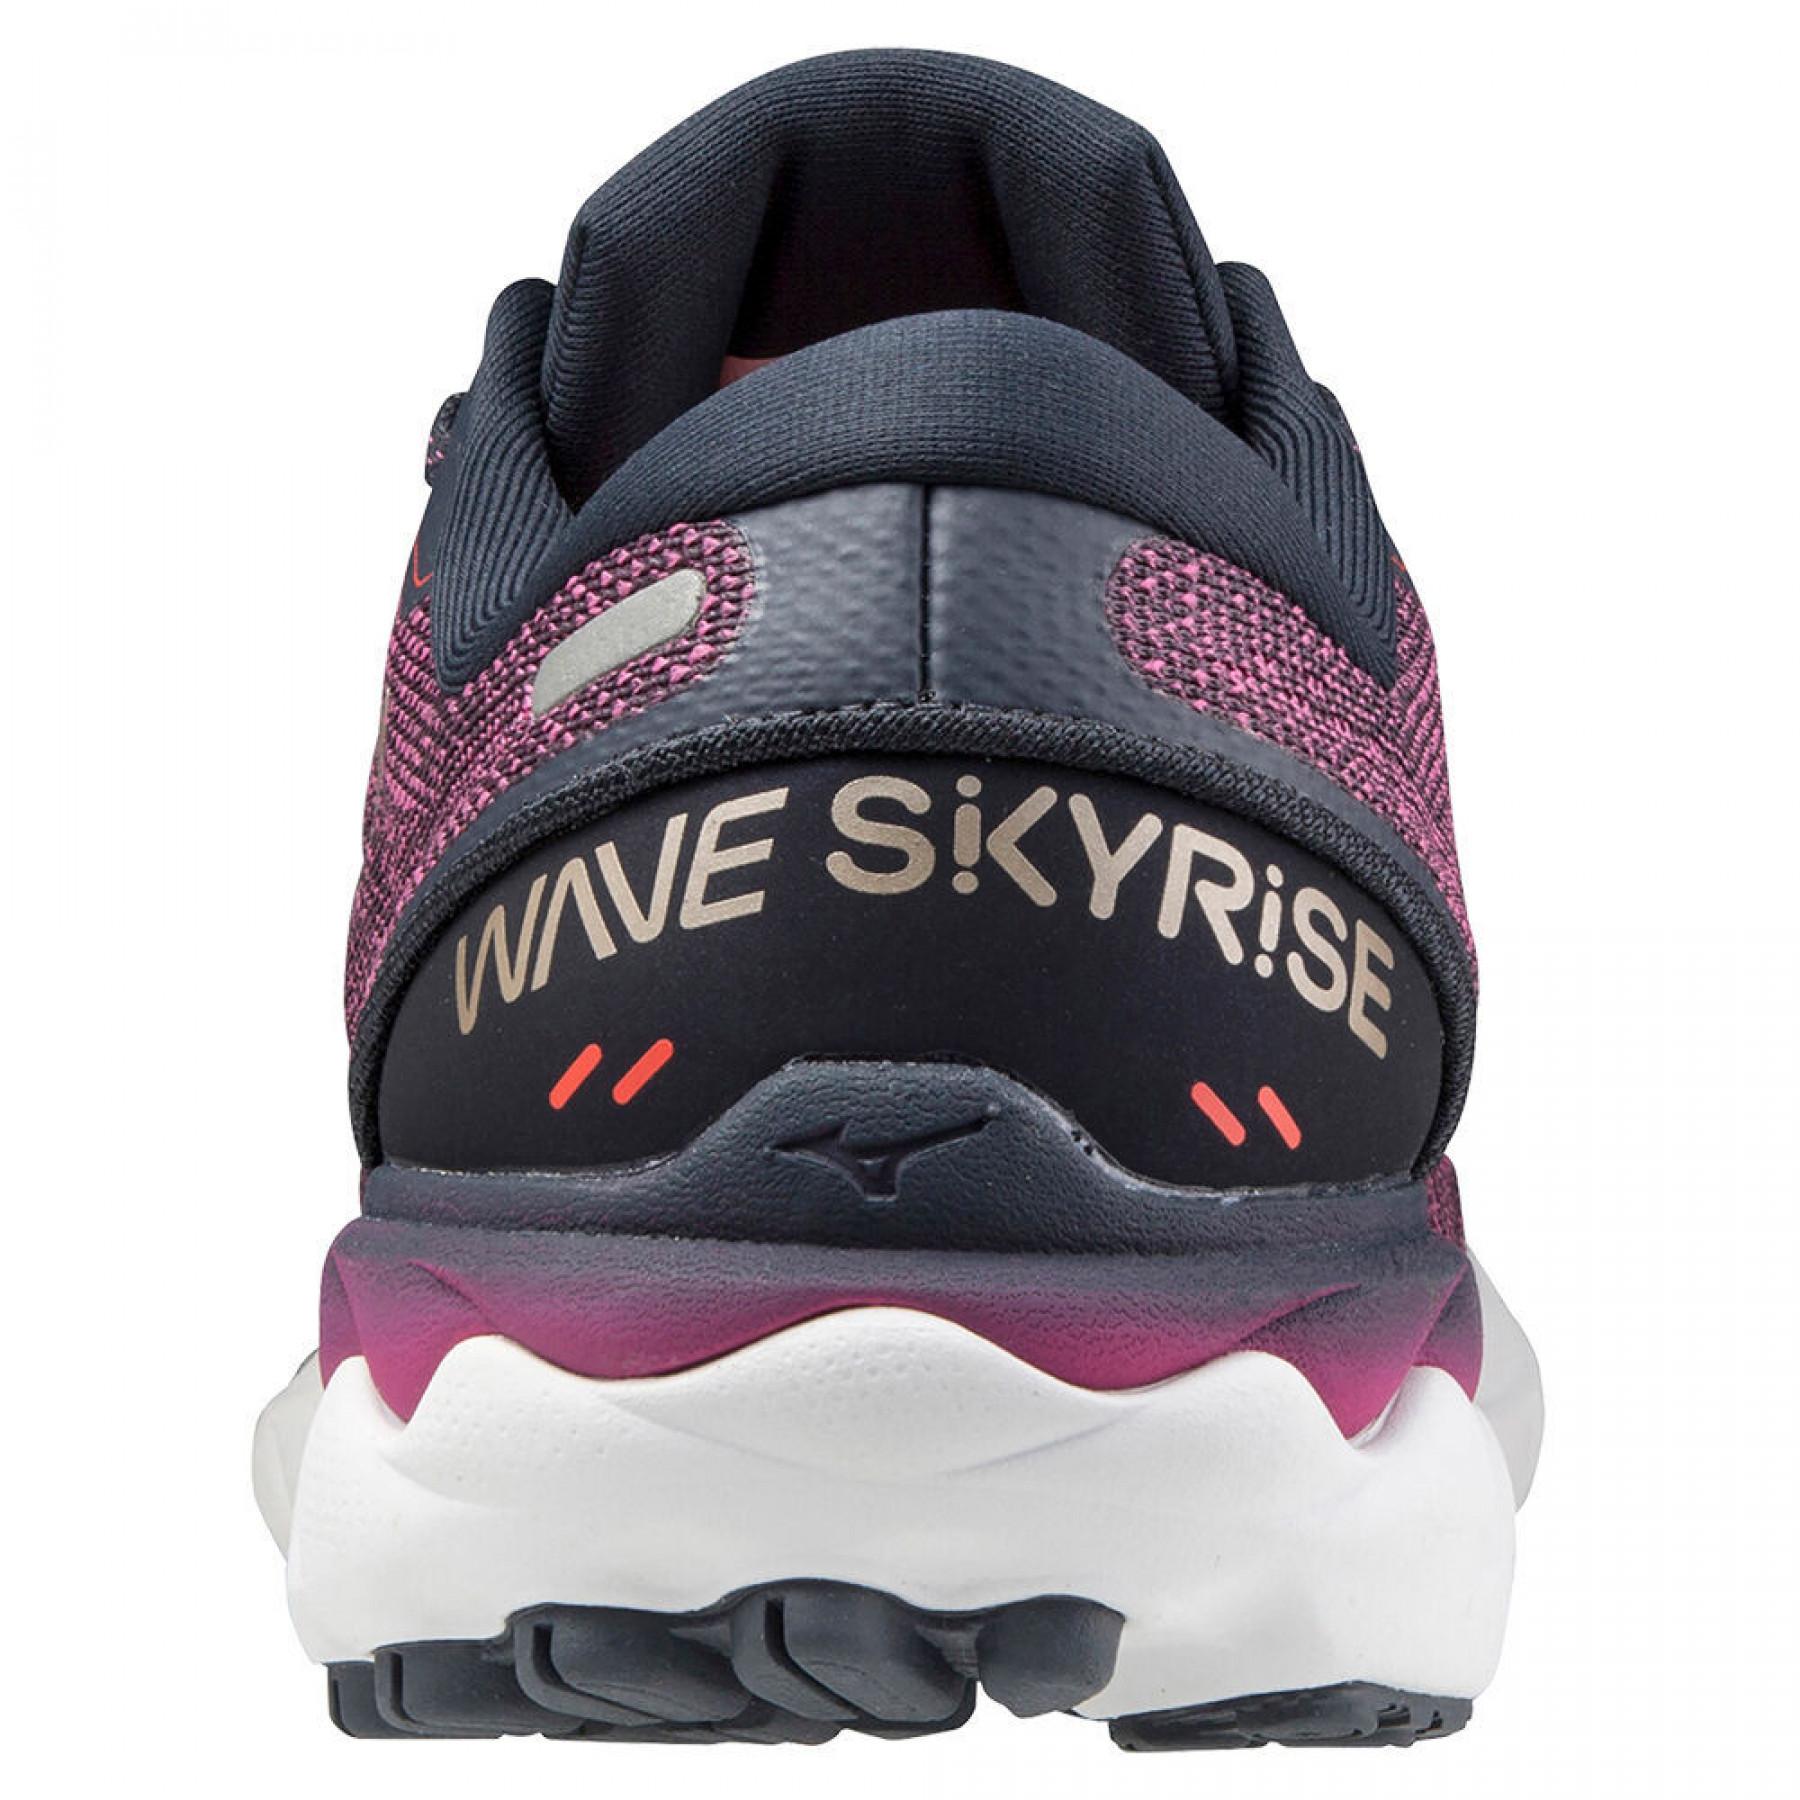 Women's shoes Mizuno Wave Skyrise 2